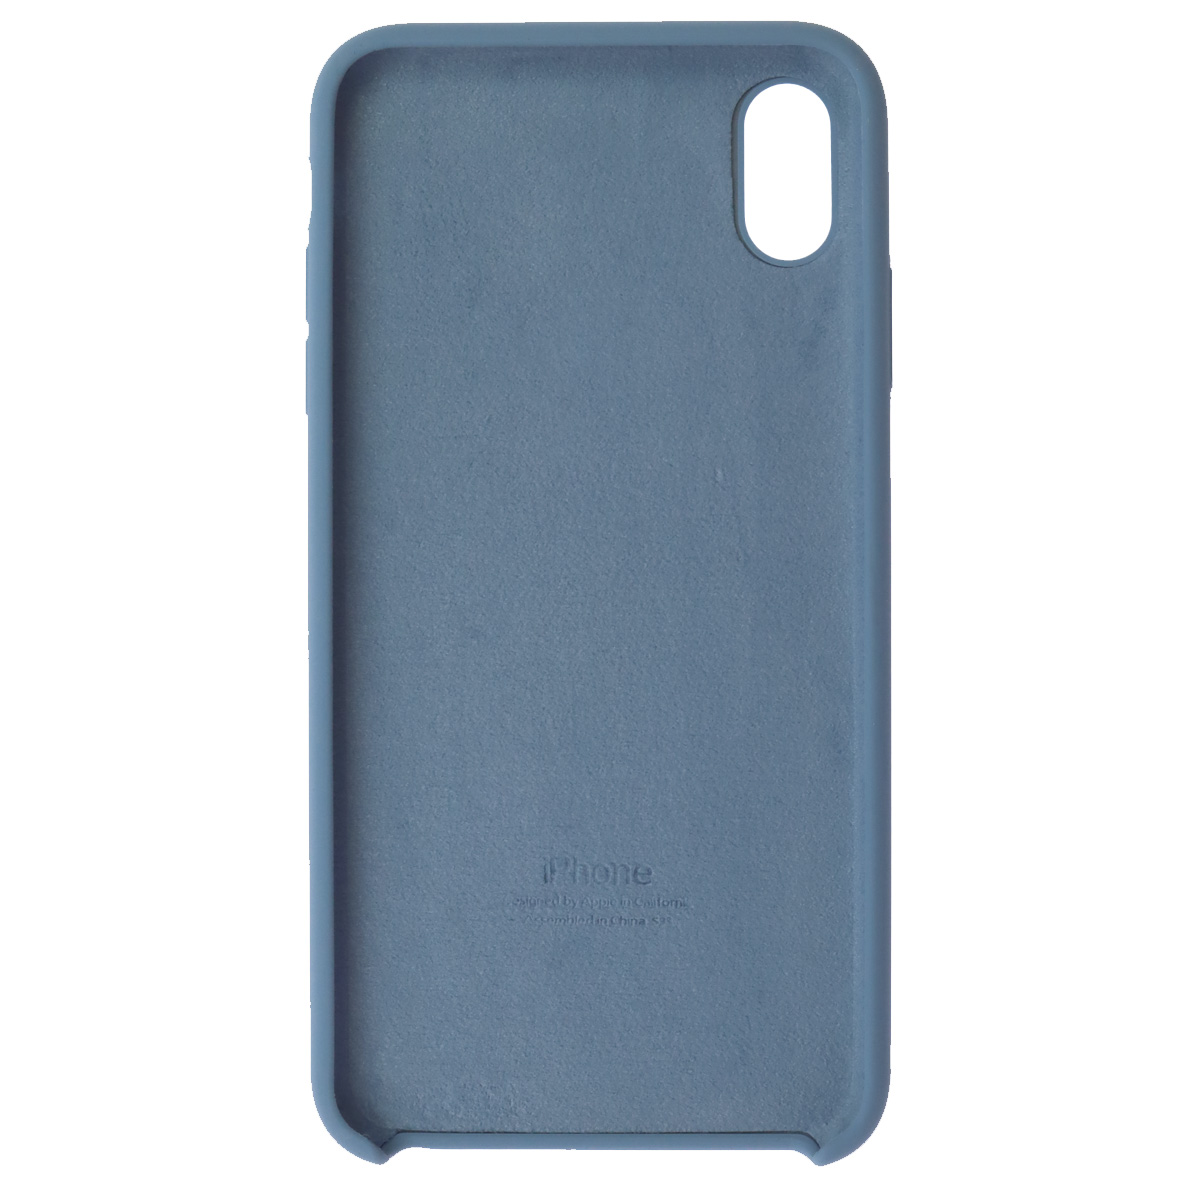 Чехол накладка Silicon Case для APPLE iPhone XS MAX, силикон, бархат, цвет светло синий